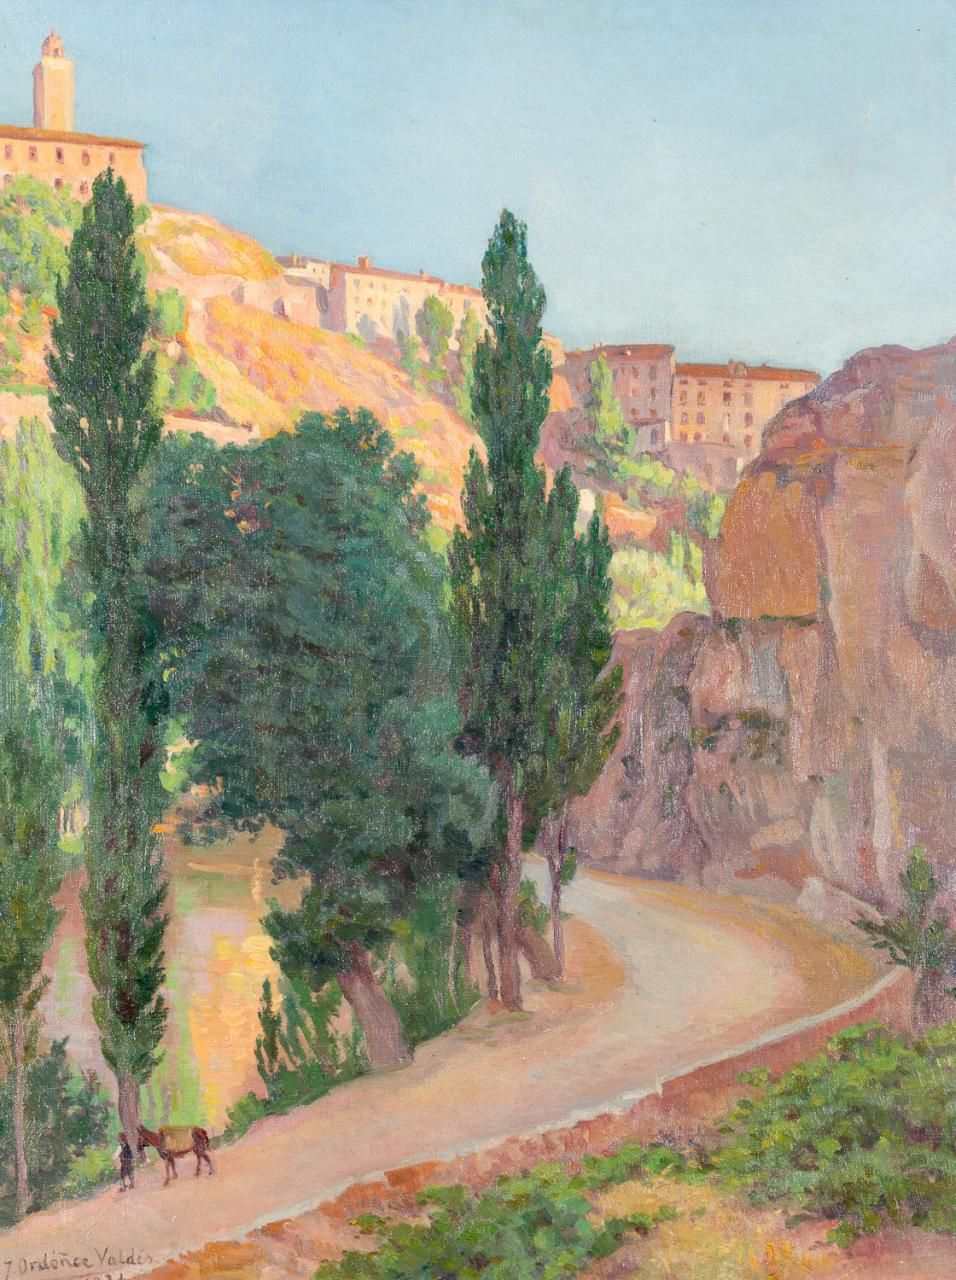 JOSÉ ORDÓÑEZ VALDÉS (Huelva, 1873 - 1953) Paesaggio
Olio su tela
72 x 56 cm
Firm&hellip;